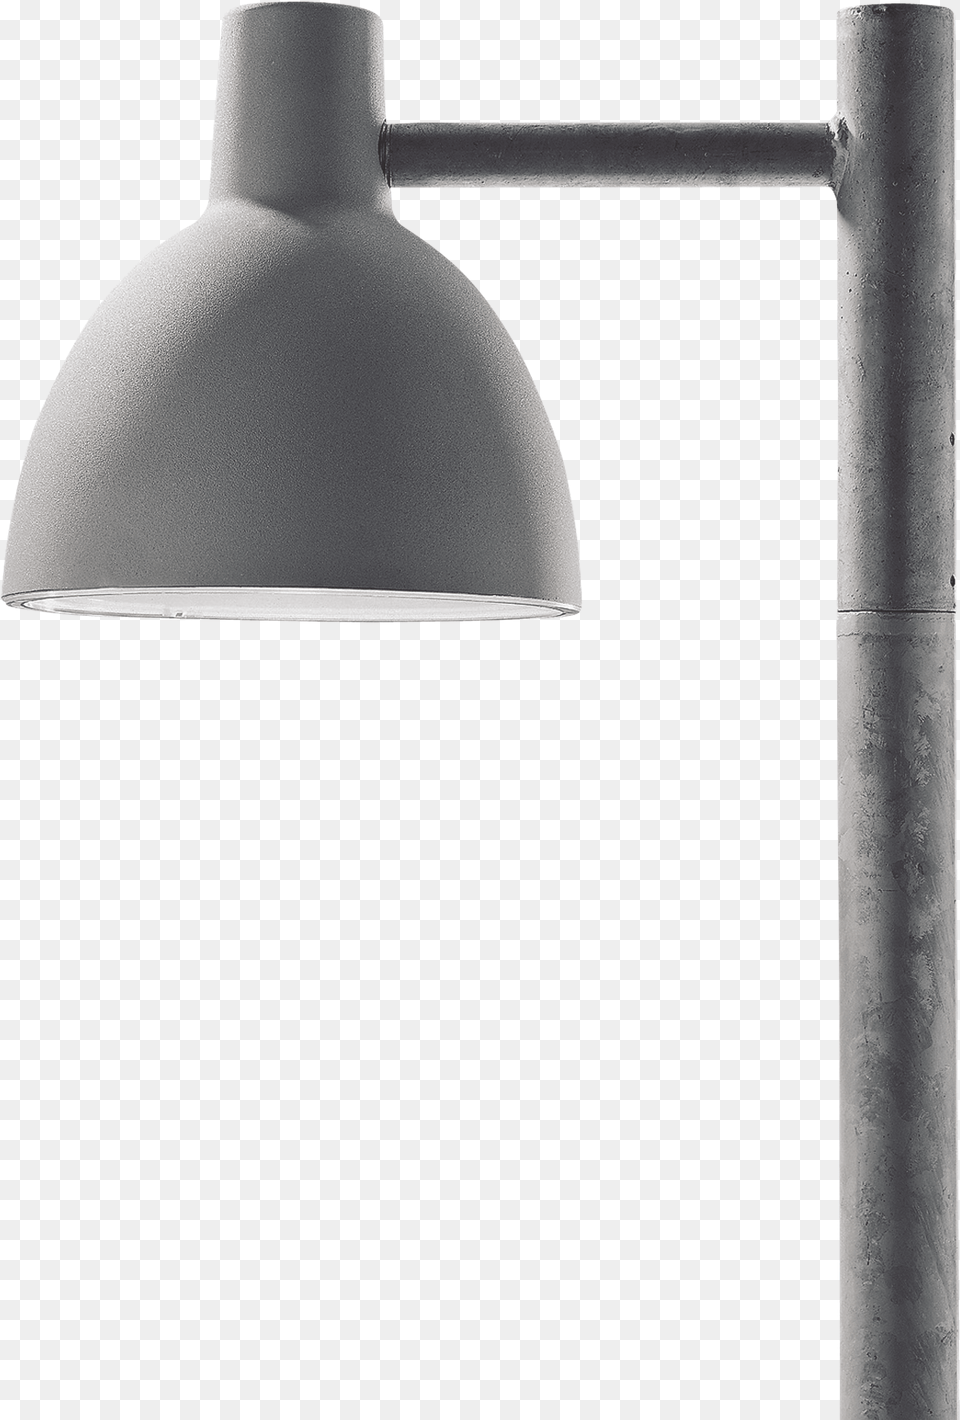 Toldbod 290 Post Lampshade, Lamp, Lighting Png